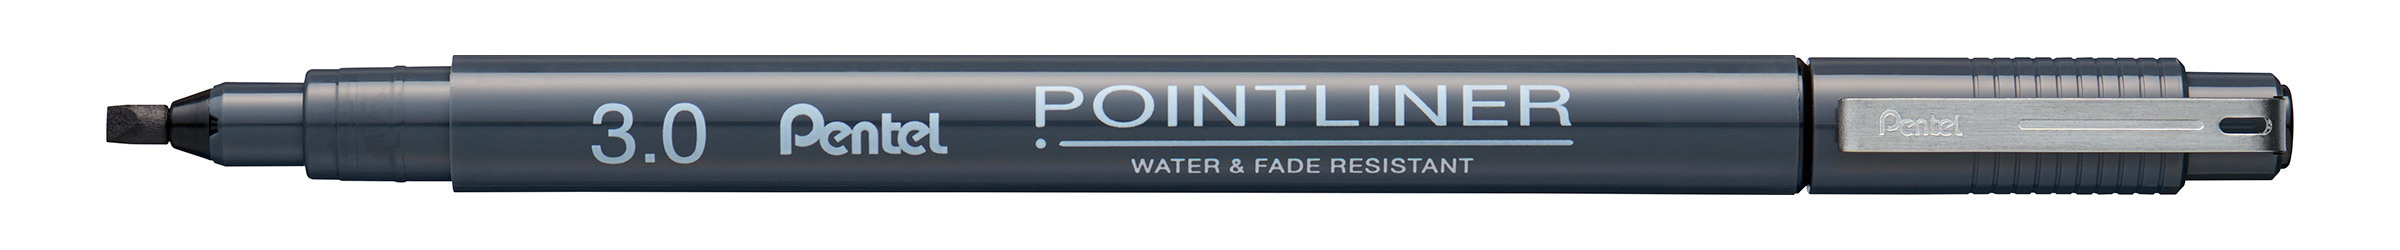 PENTEL Fineliner Pigment 3.0 mm S20P-C3A POINTLINER, noir